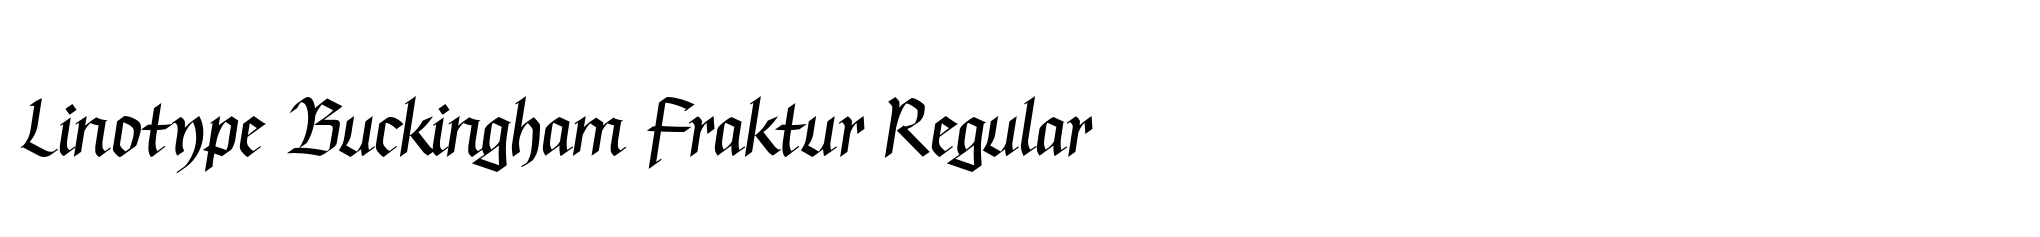 Linotype Buckingham Fraktur Regular image